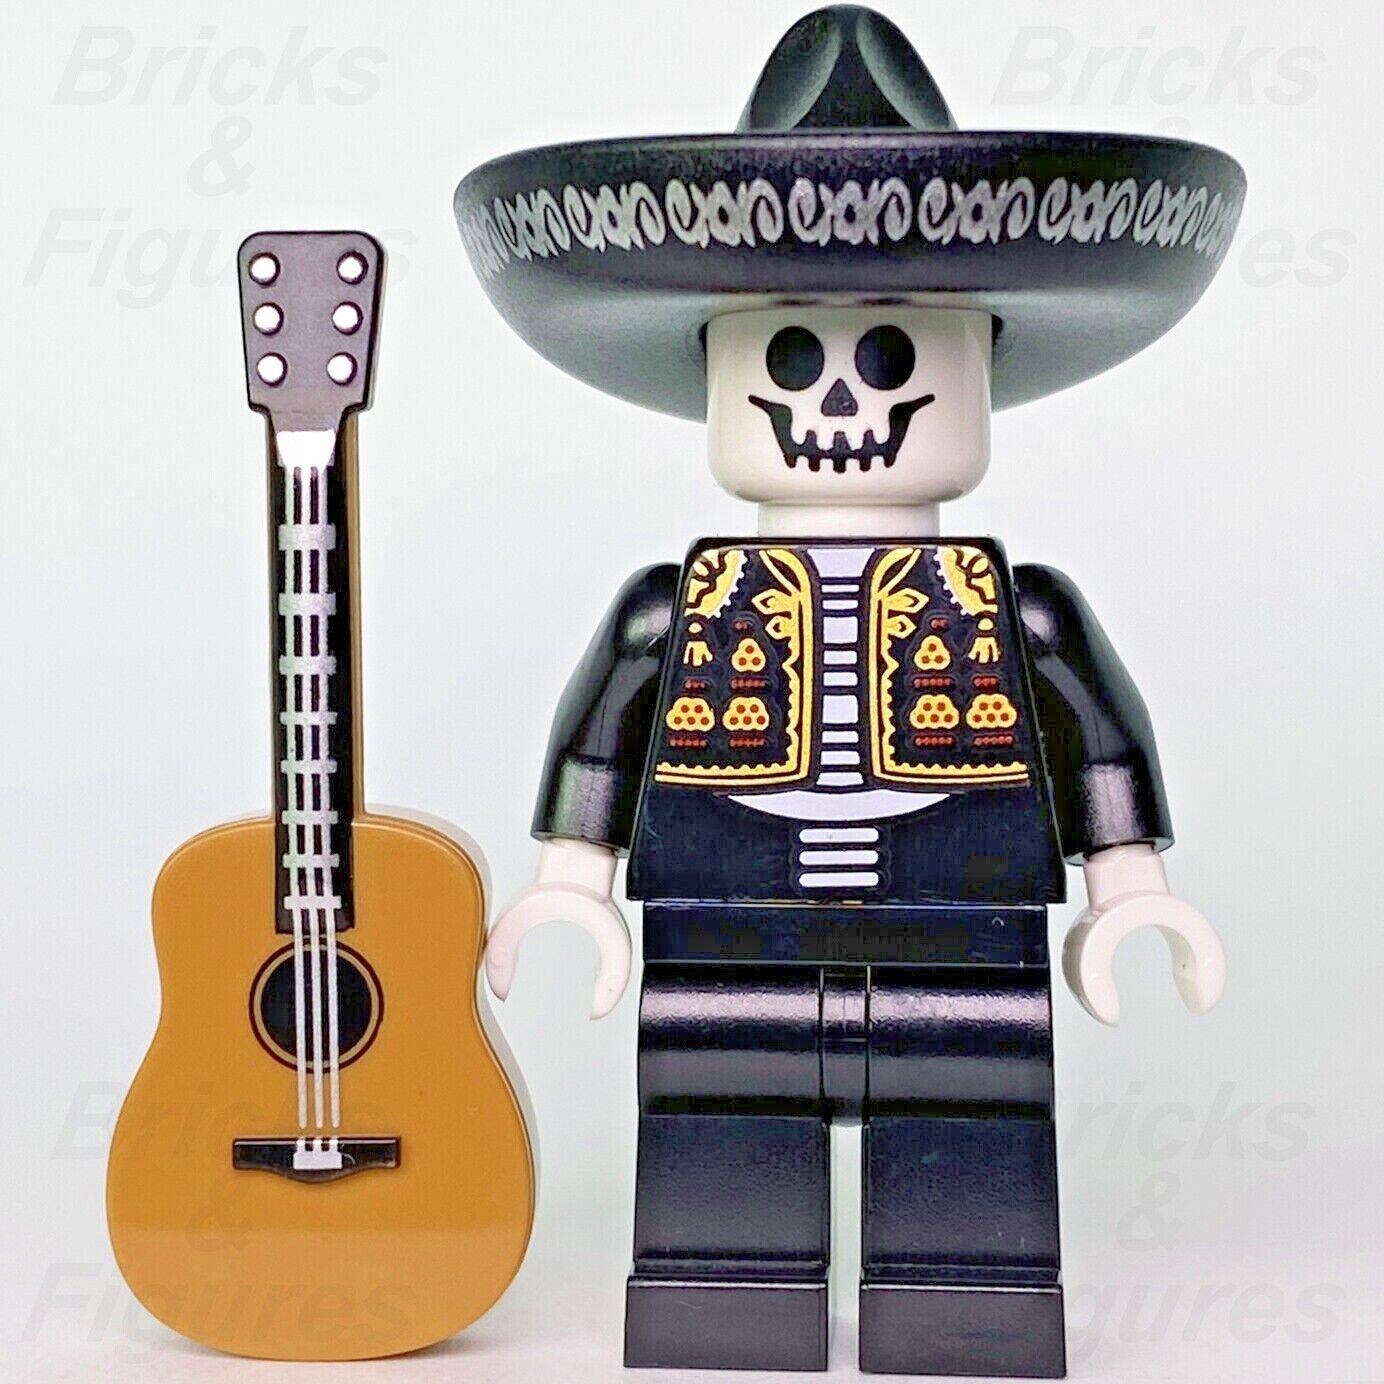 LEGO IDEAS - Acoustic Guitar